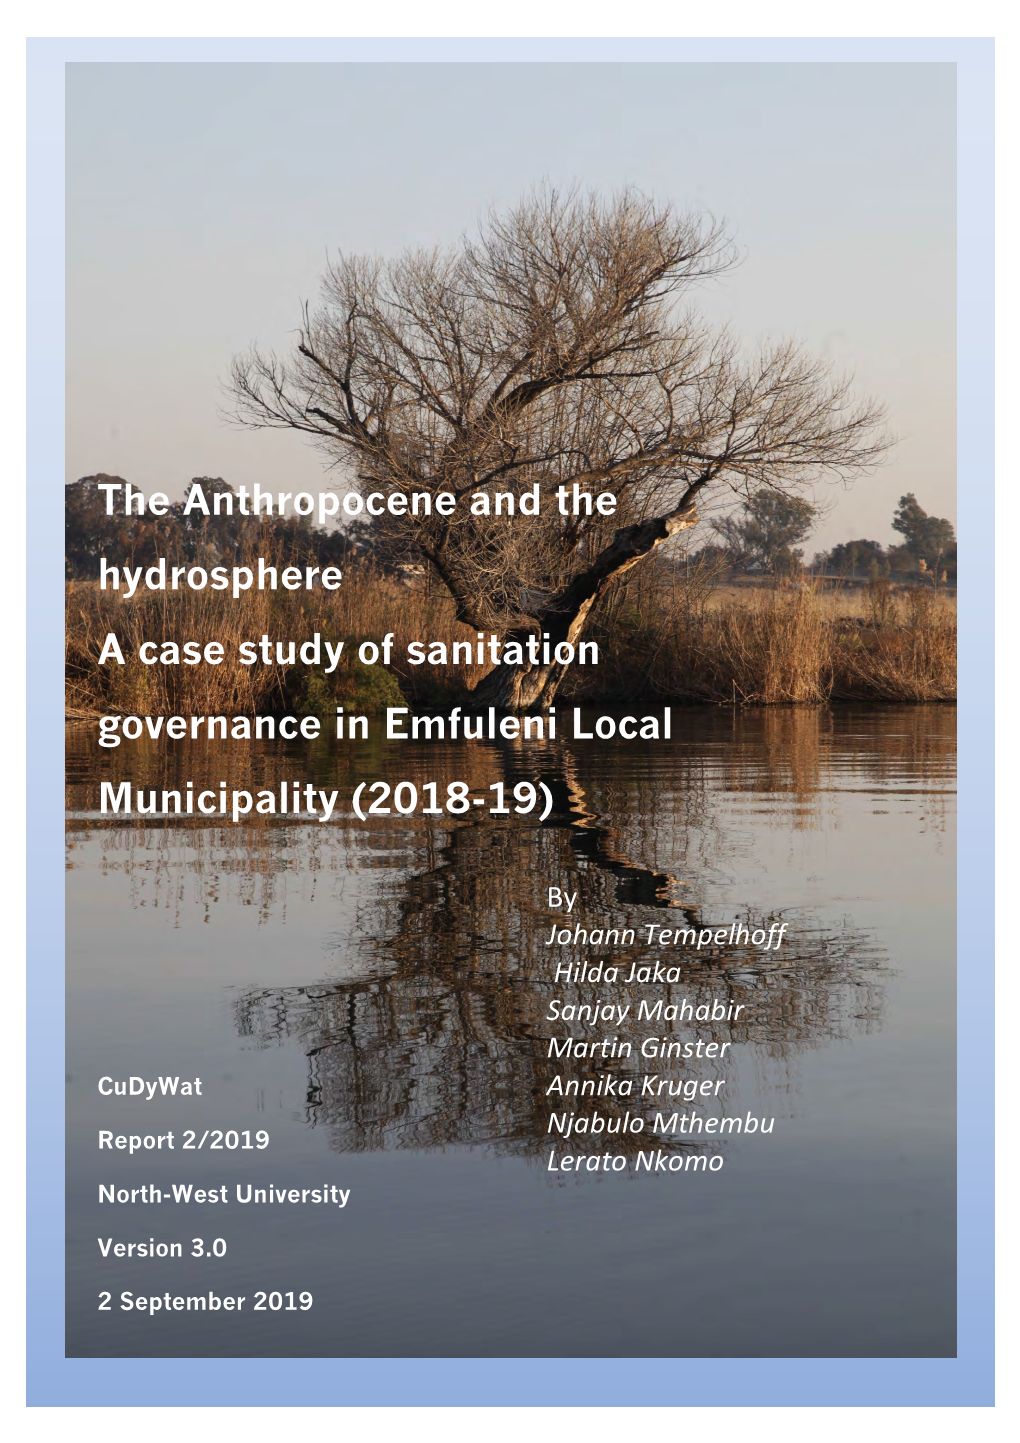 A Case Study of Sanitation Governance in the Emfuleni Local Municipality